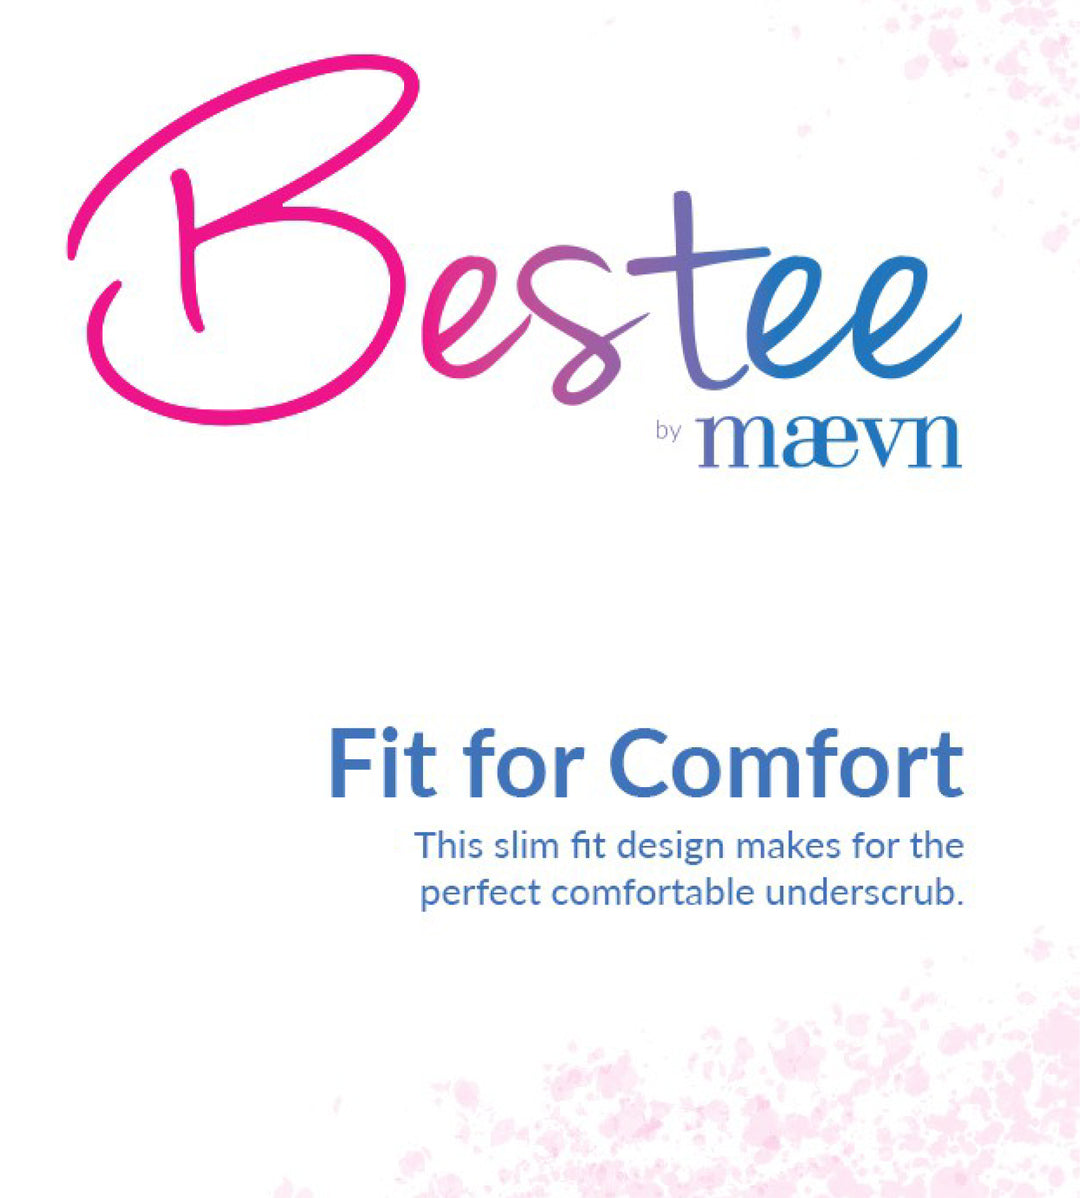 Image Portada_Booklet Bestee Fit For Comfort_Maevn Uniforms Latino America-Scrubs-Uniformes Quirurgicos-ScrubsUniformes